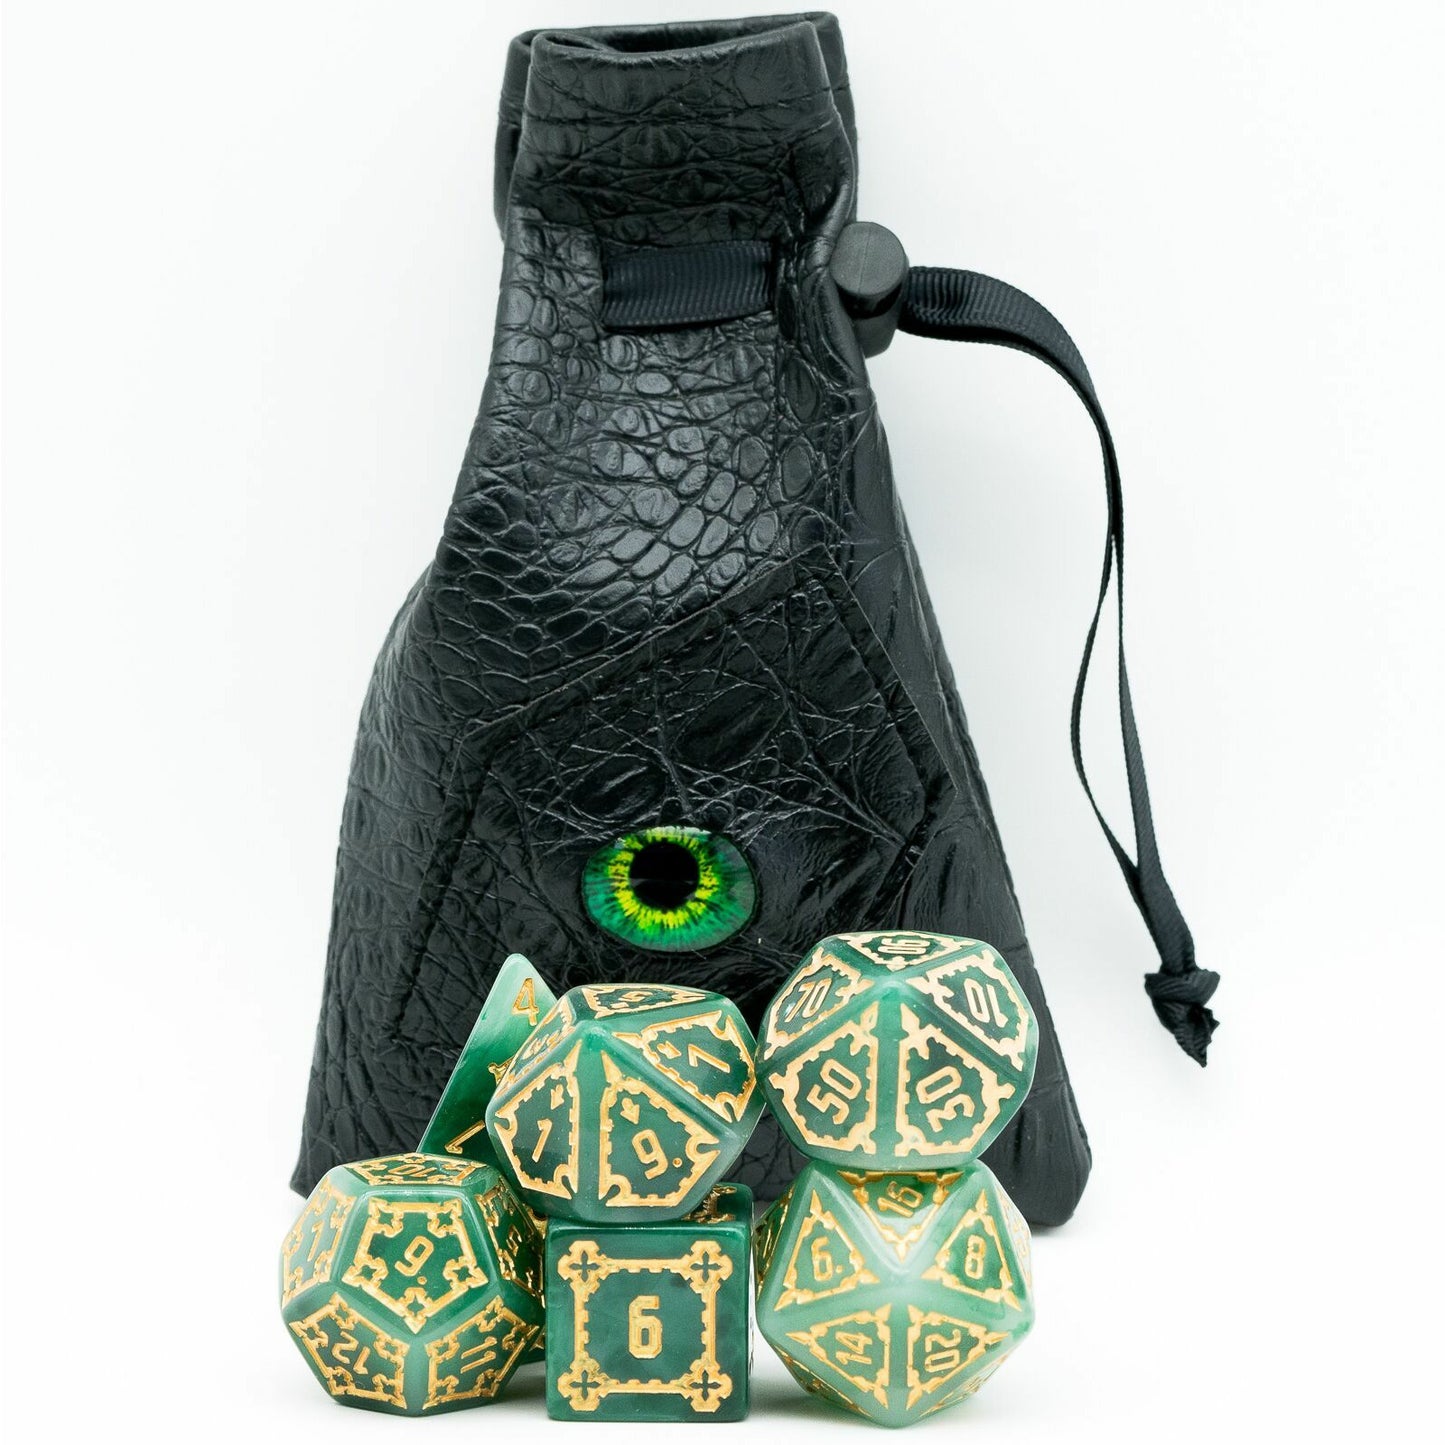 Violent jade elixir dice set in front of dragon eye carrying bag